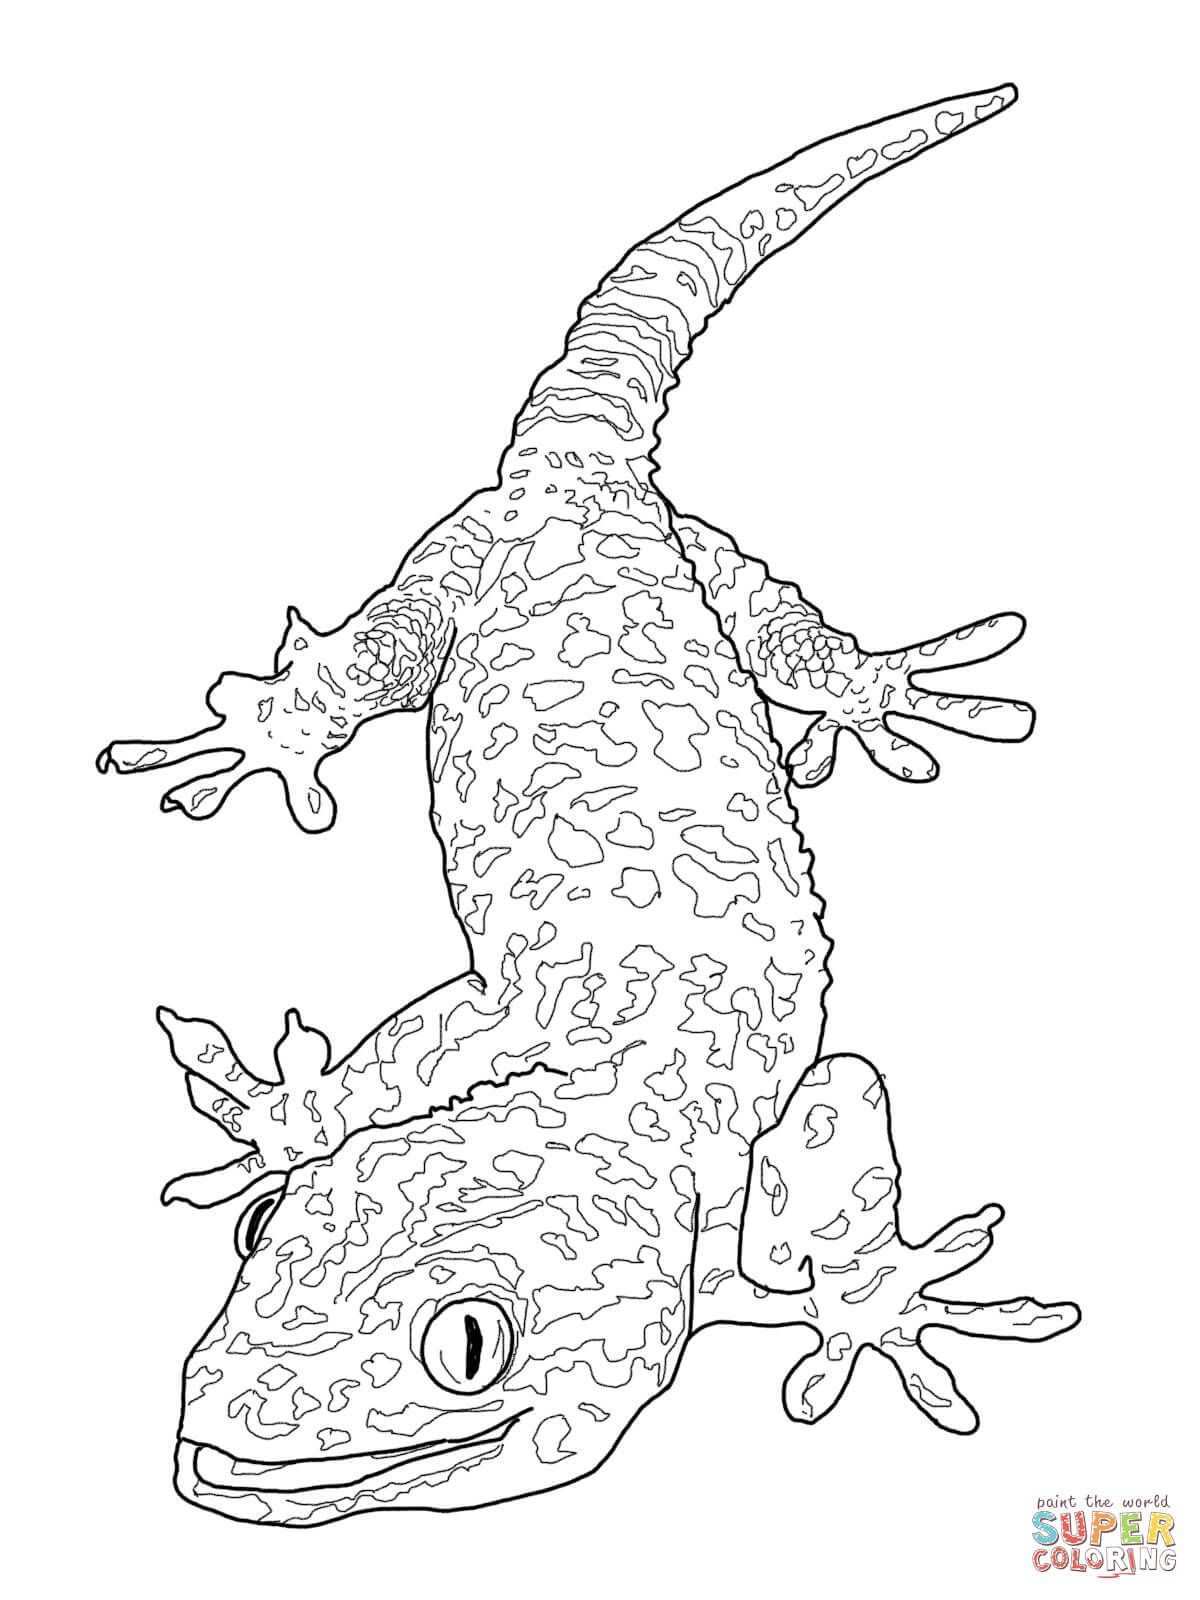 Tokay Gecko Coloring Page Jpg 1200 1600 Animal Coloring Pages Cool Coloring Pages Coloring Pages